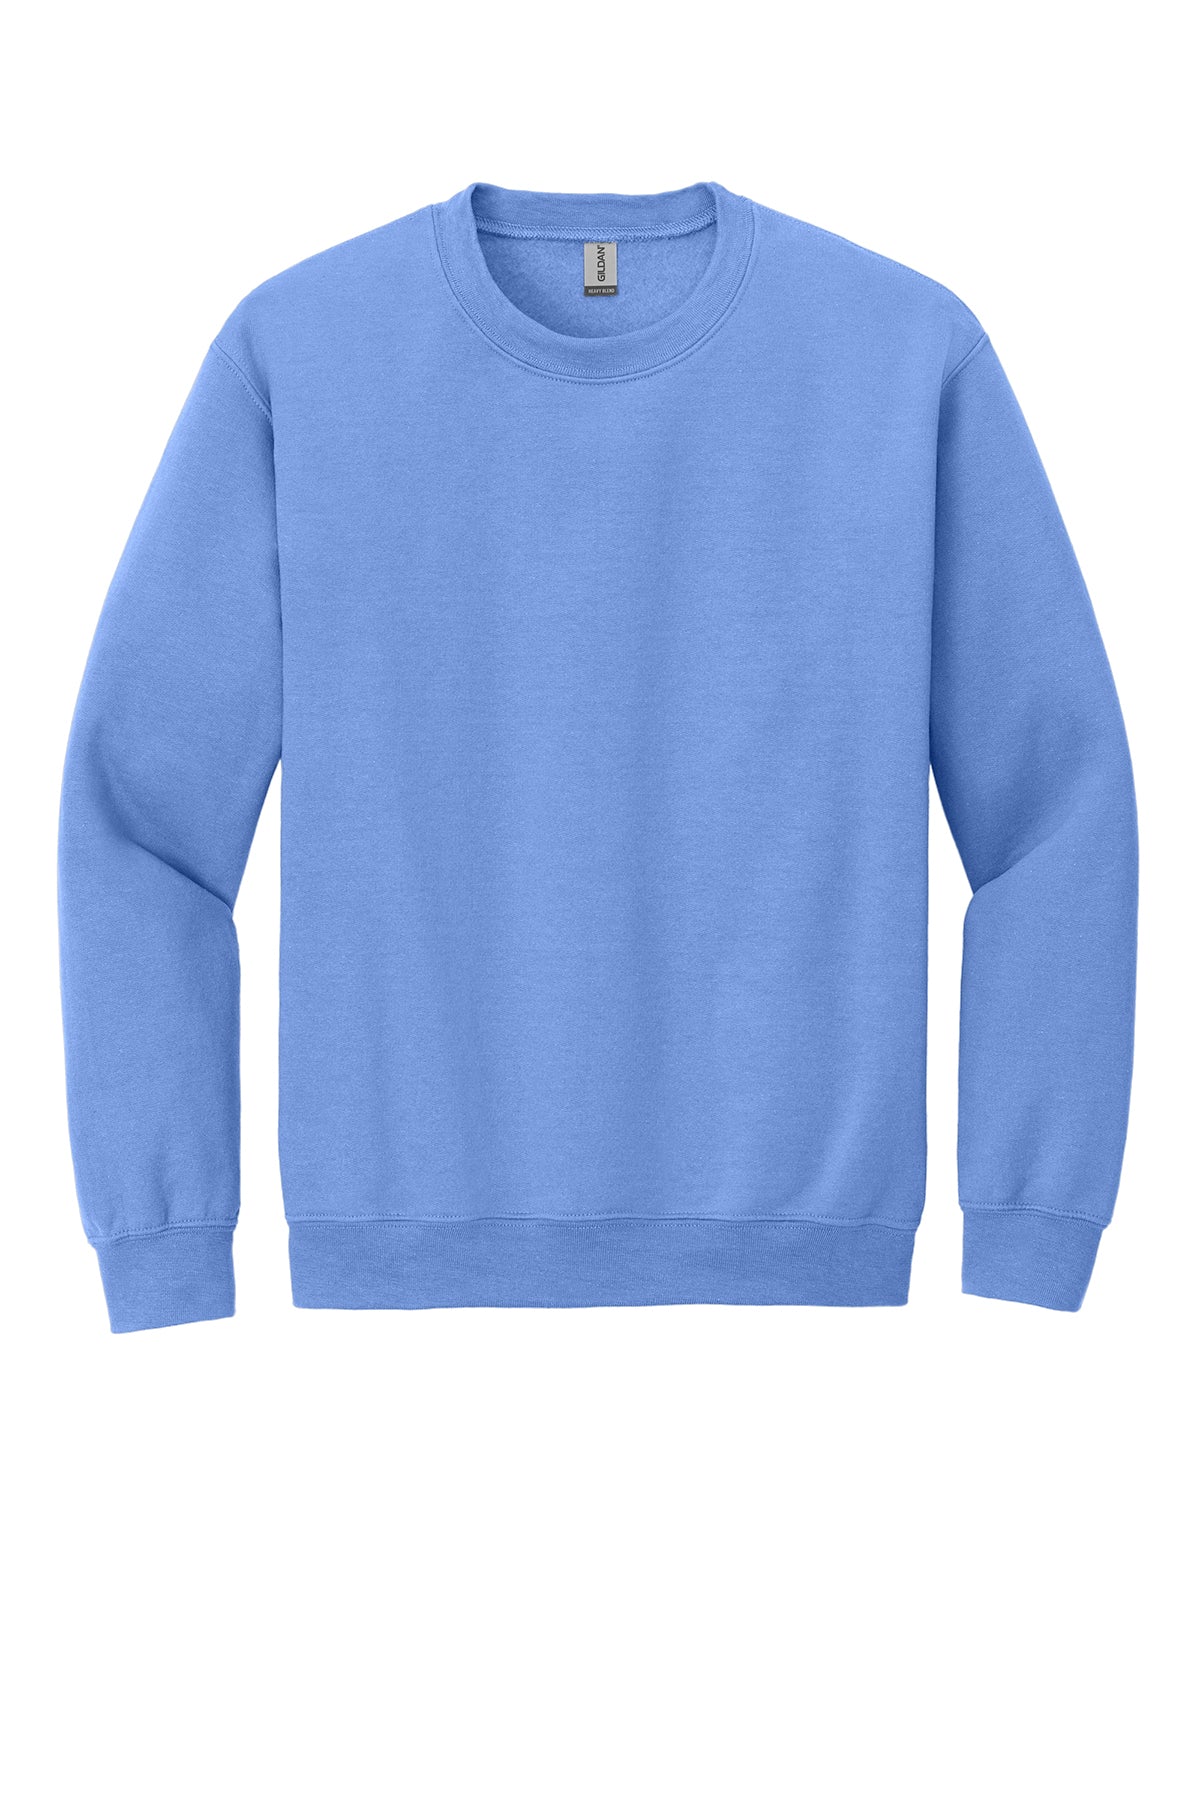 The Mutt Strutt Crewneck Sweatshirt